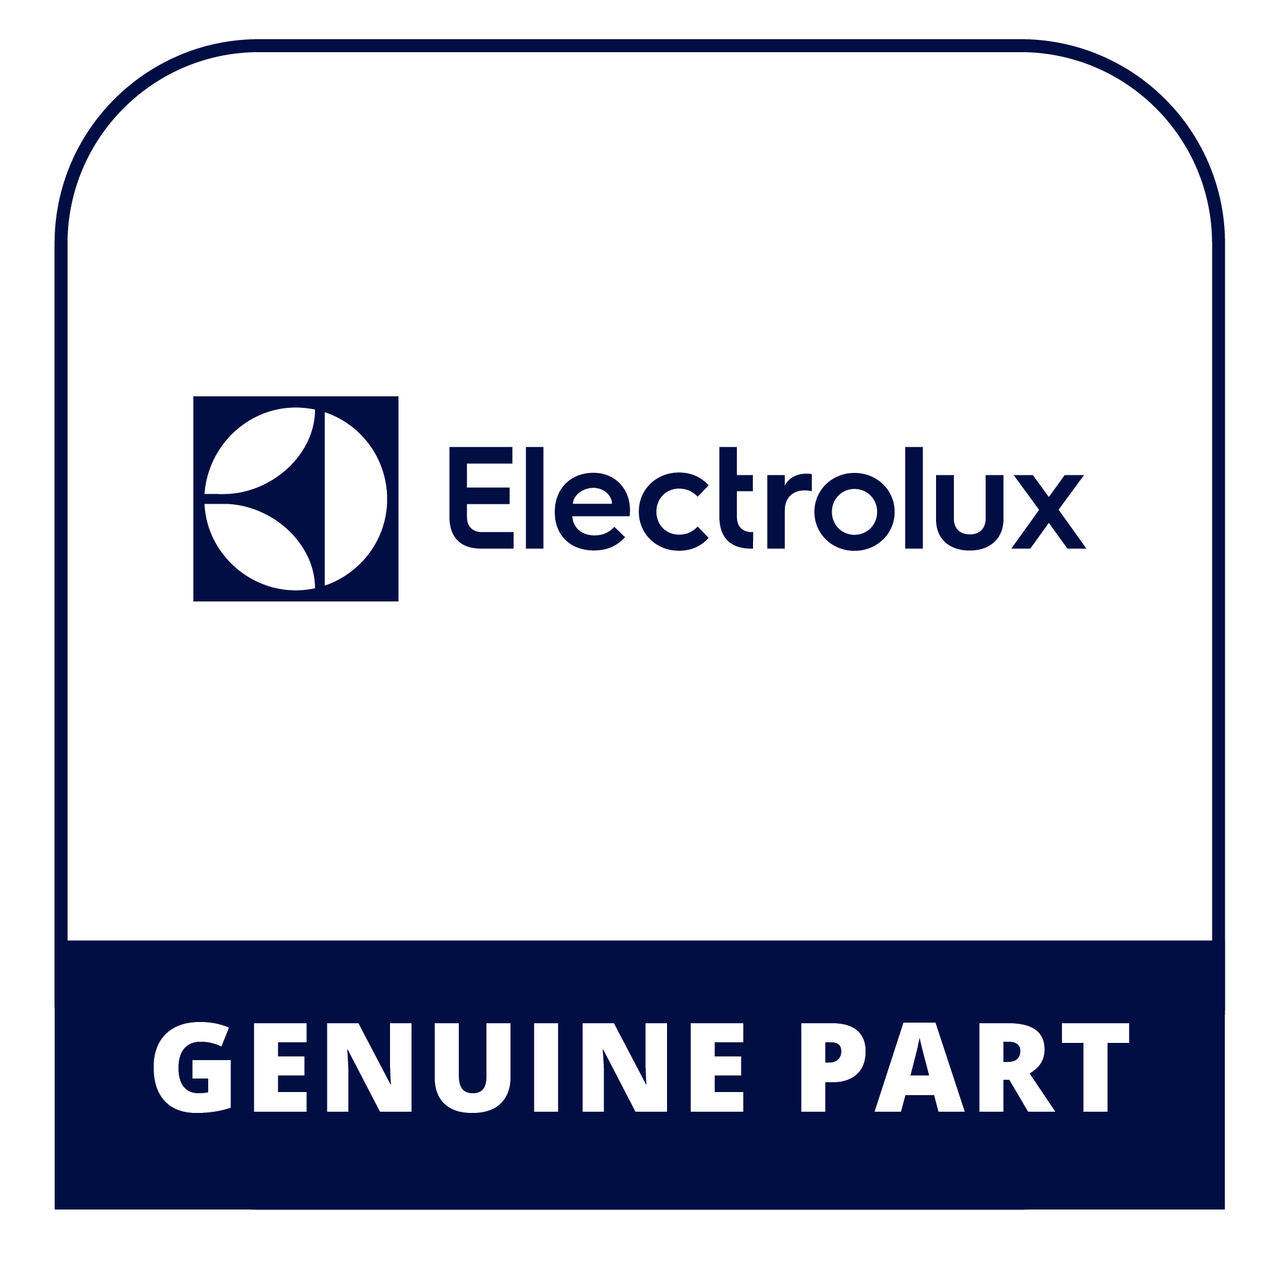 Frigidaire - Electrolux 316220804 - Overlay - Genuine Electrolux Part